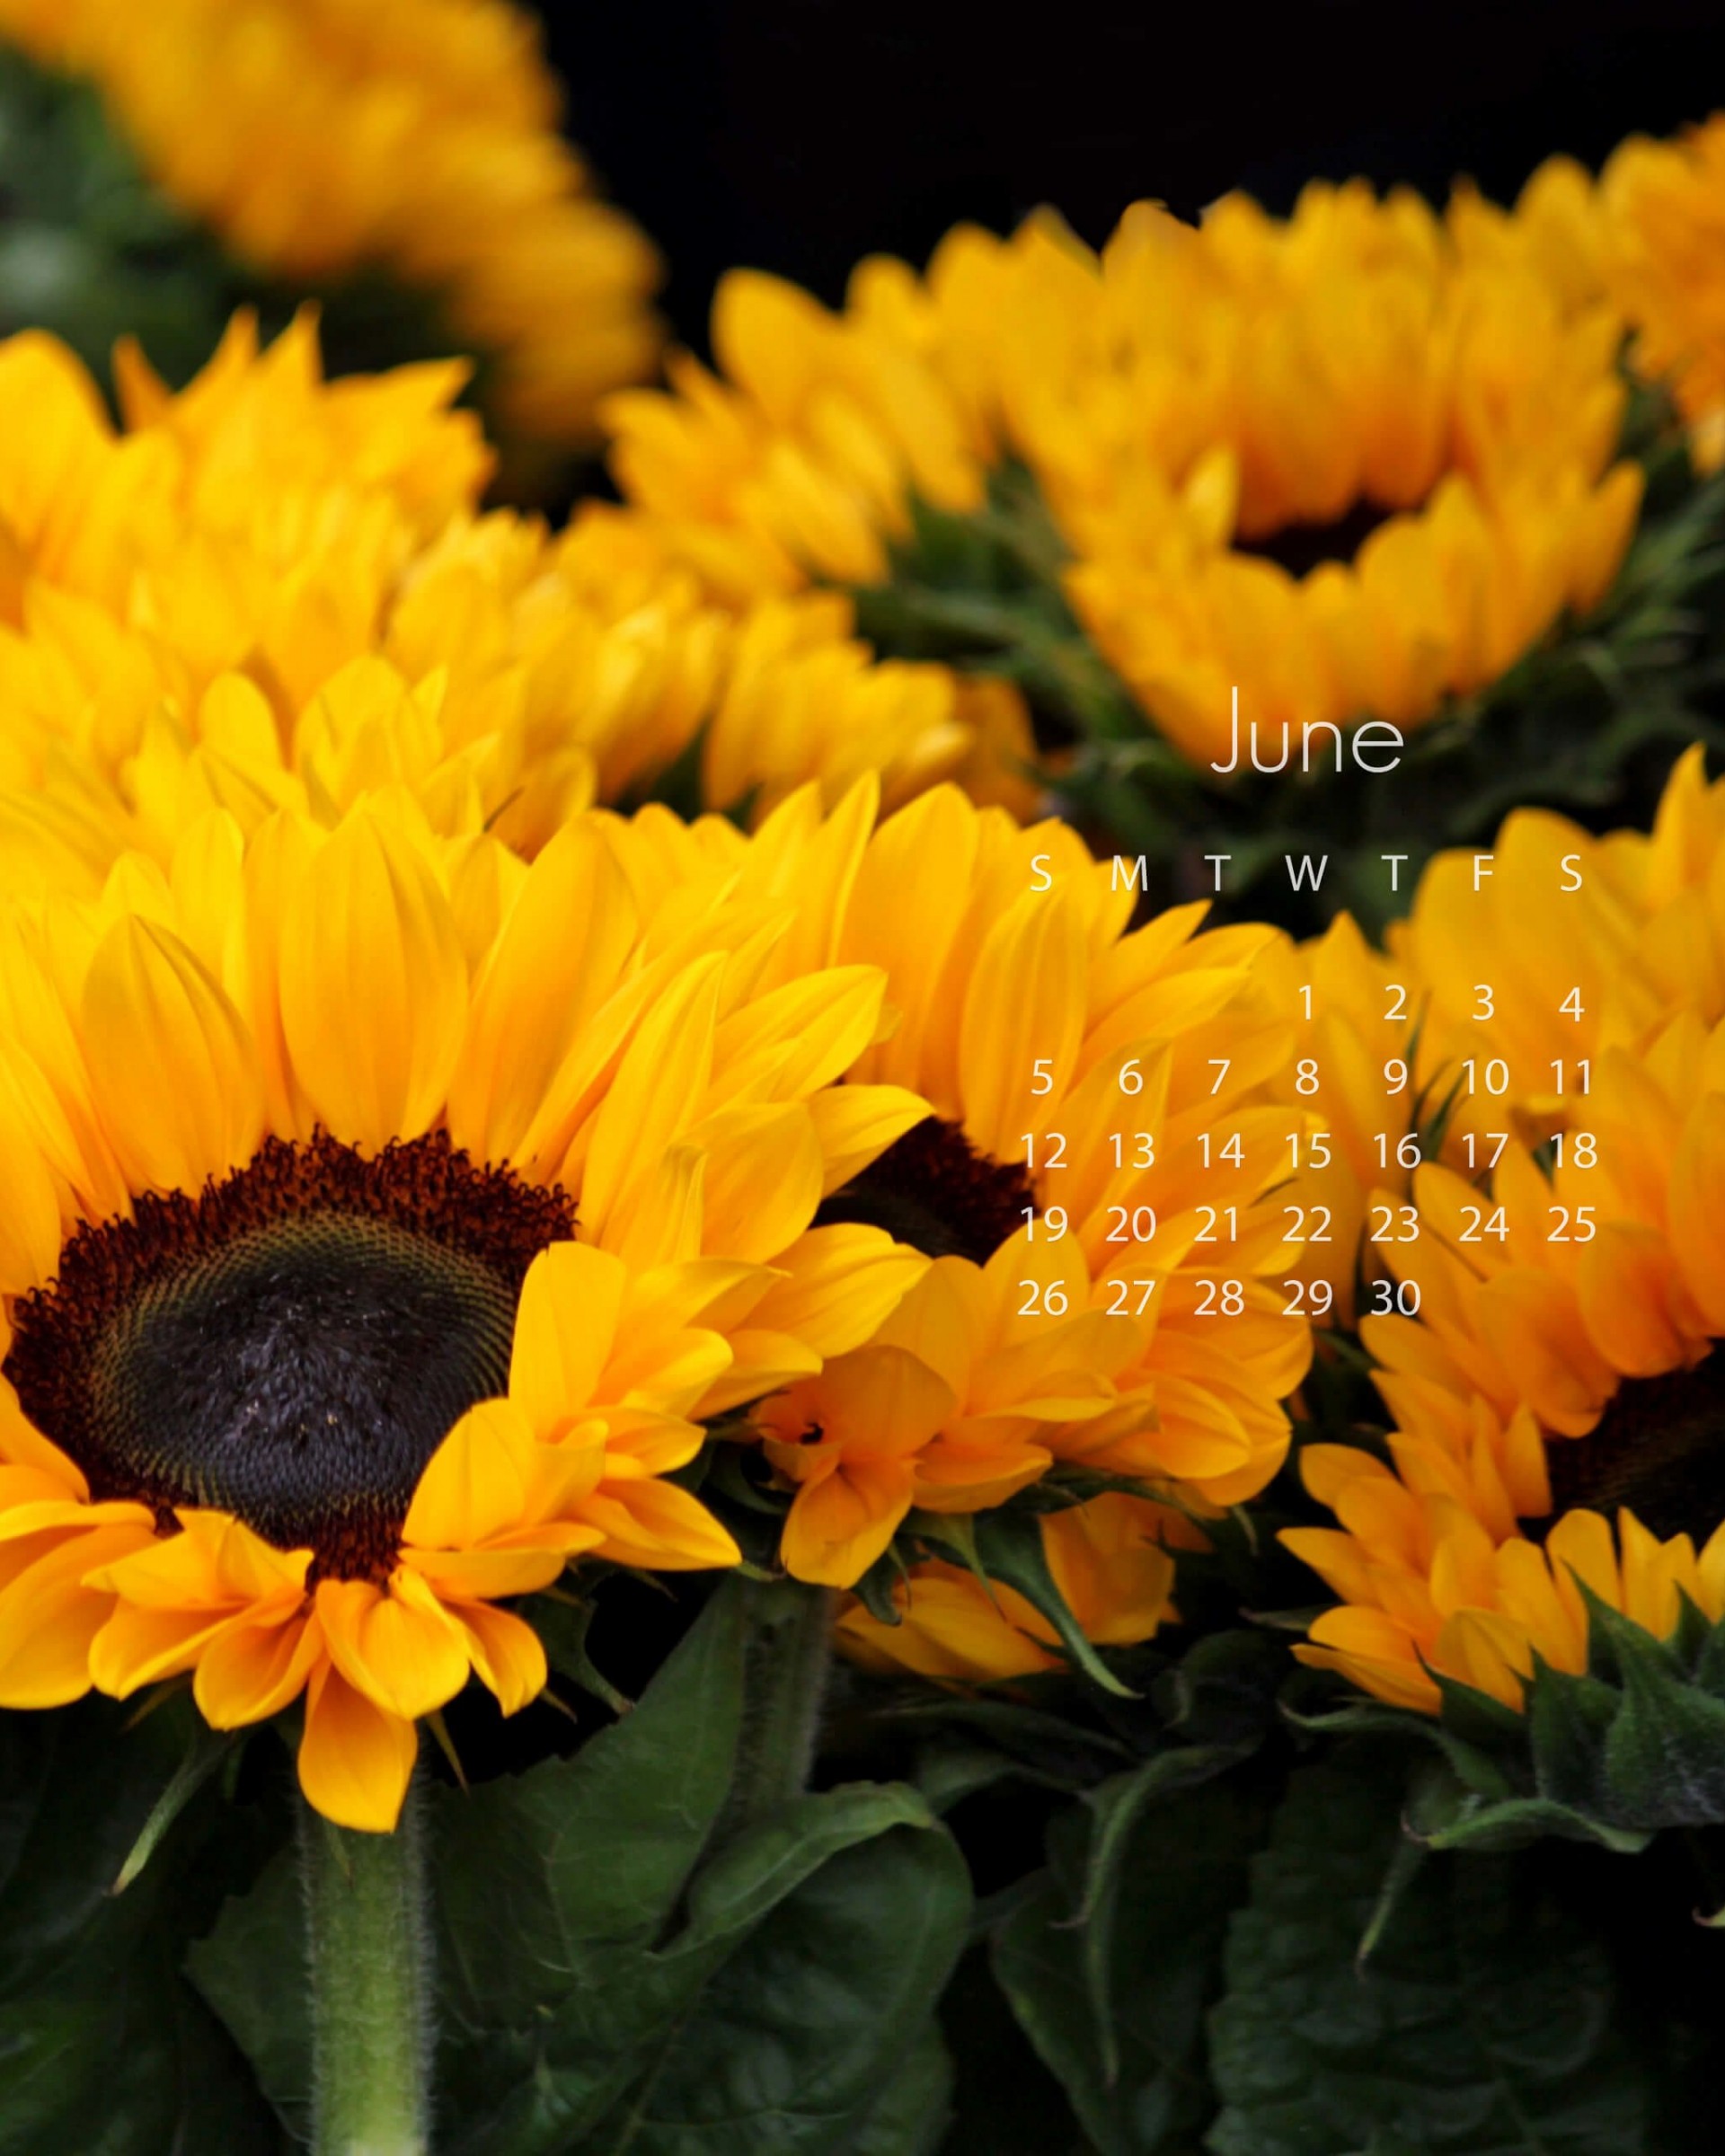 June 2016 Calendar Wallpaper for Google Nexus 7